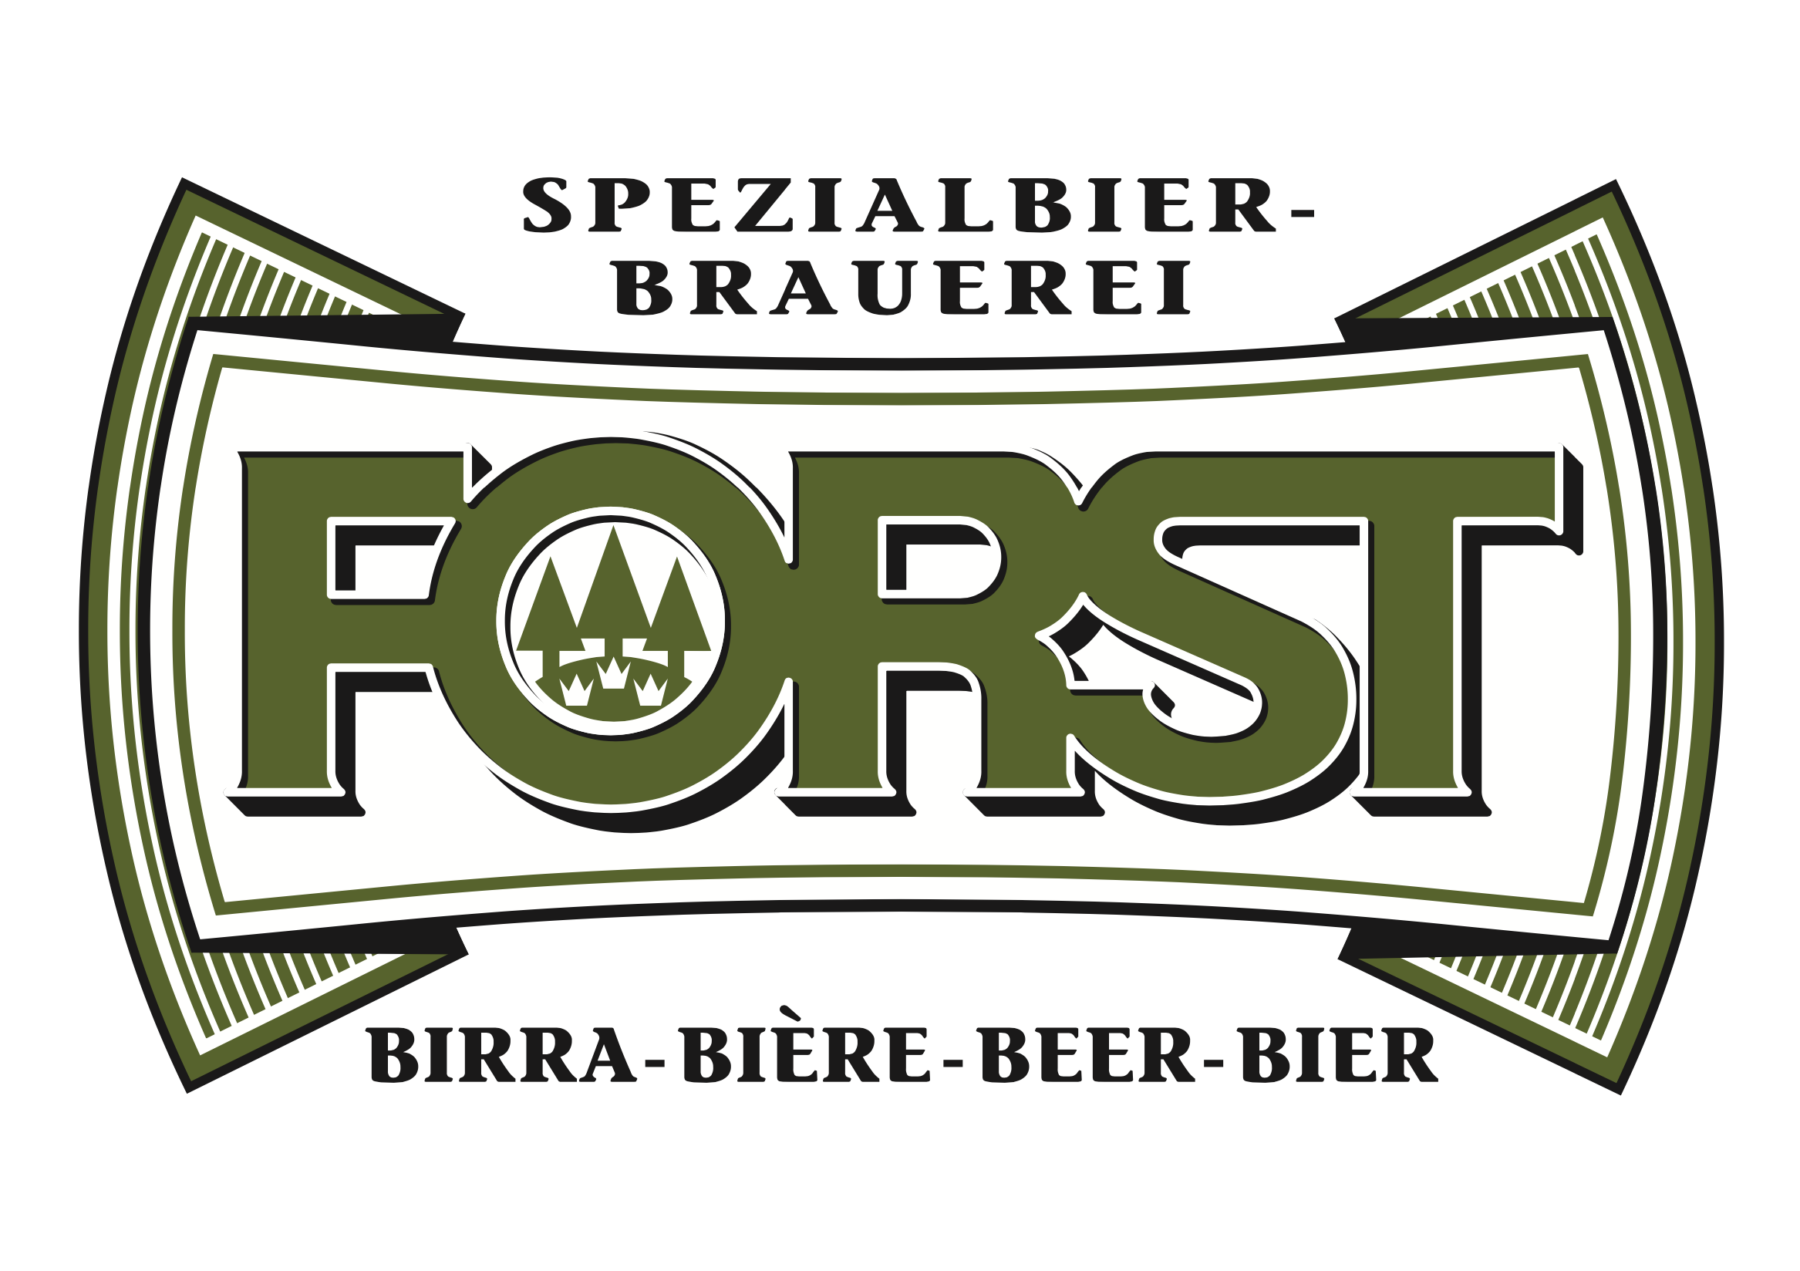 Titelsponsor Spezialbier Brauerei Forst